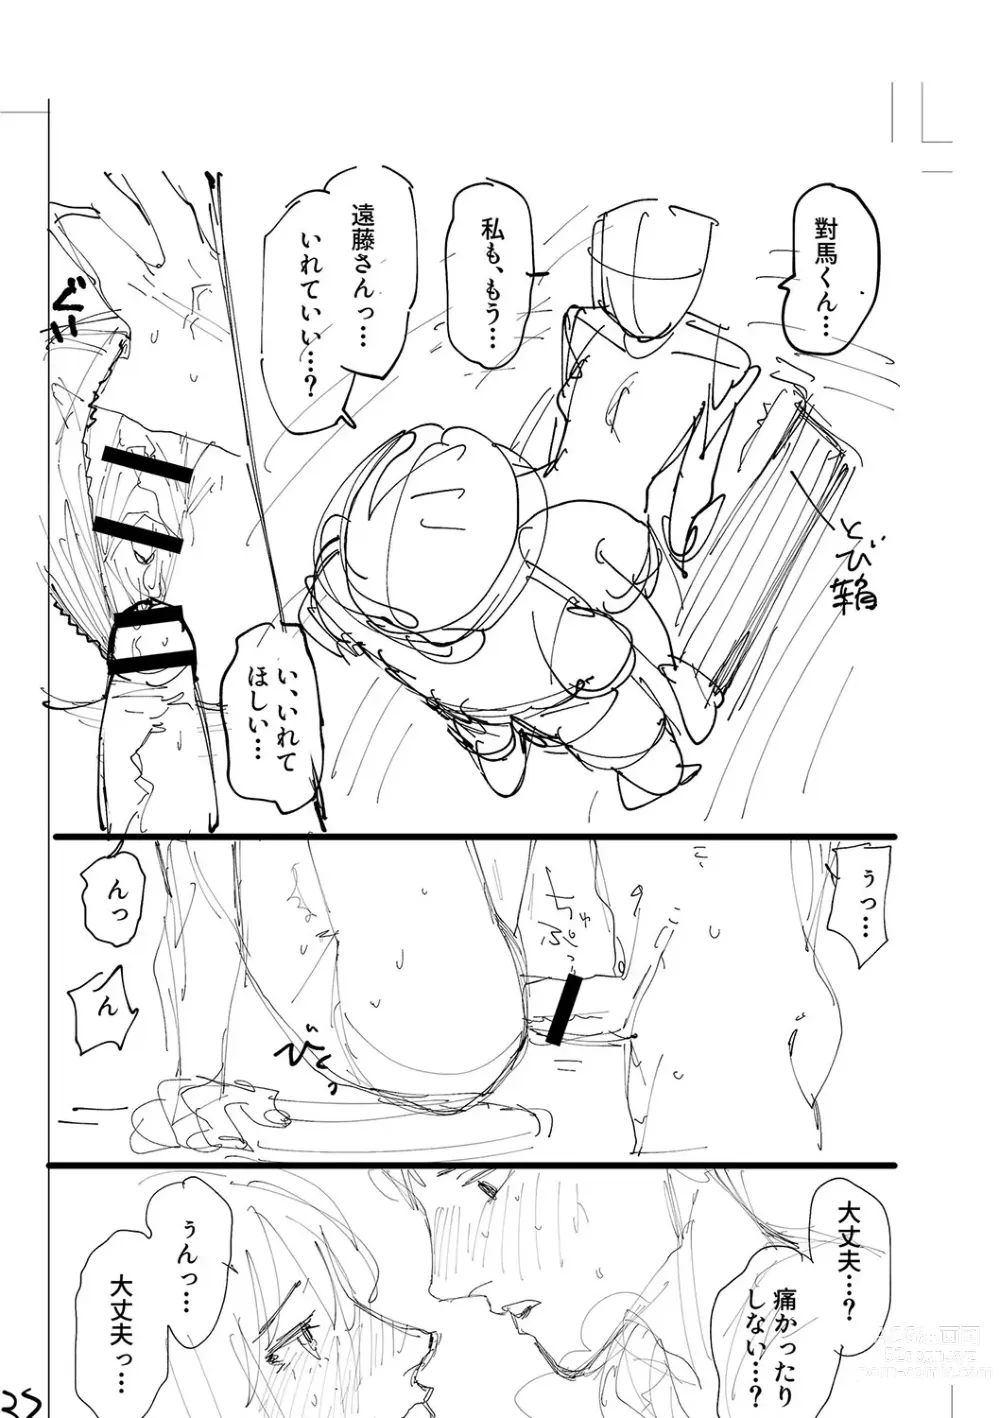 Page 245 of manga Oyasumi, Teen - Good Night, Goodbye